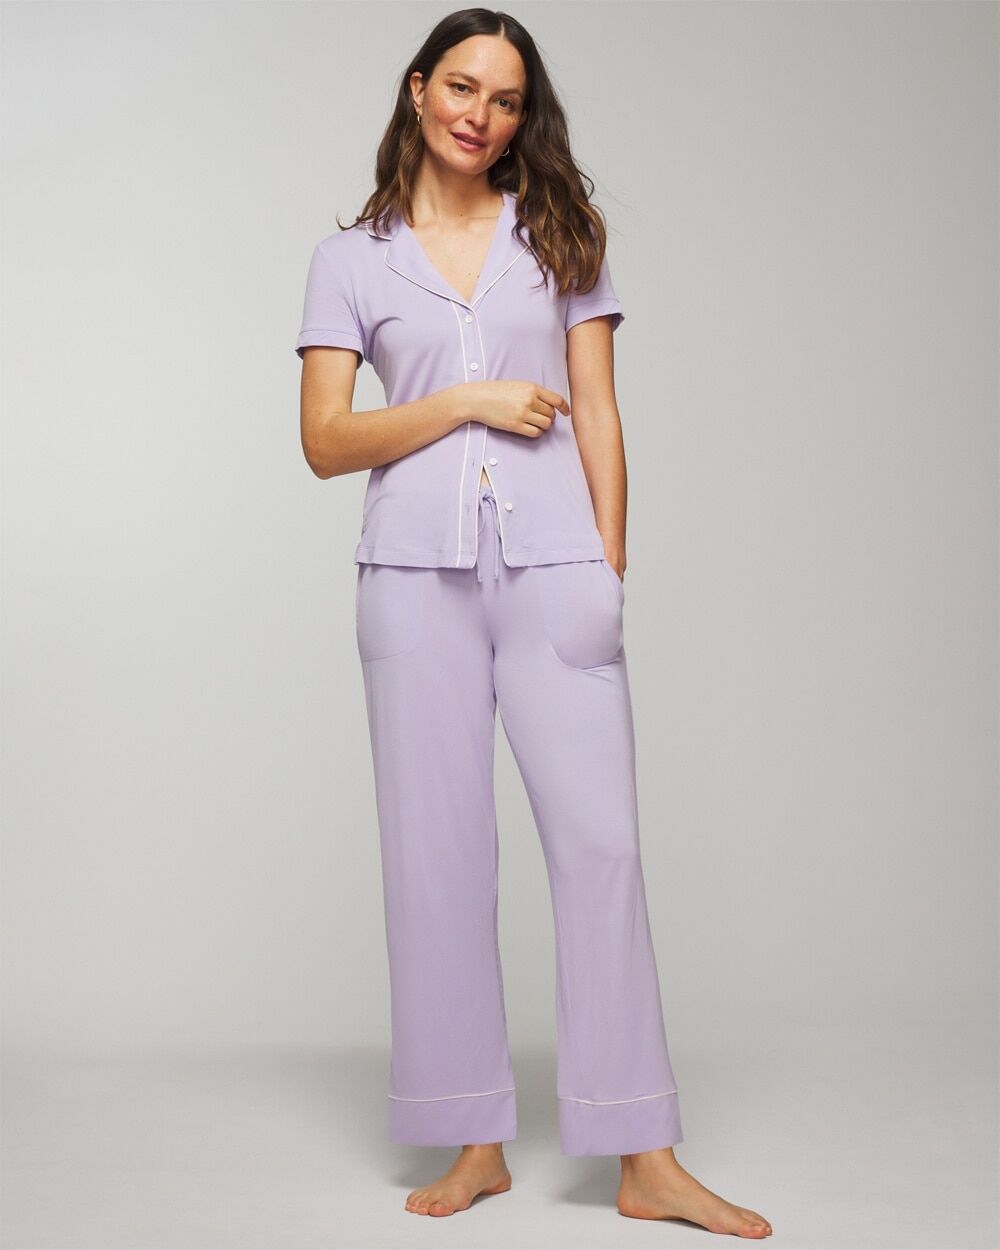 Women's Cool Nights Pajama Pants in Lavender size XL   Soma, Pajama Sets - Women - Lavender - XL